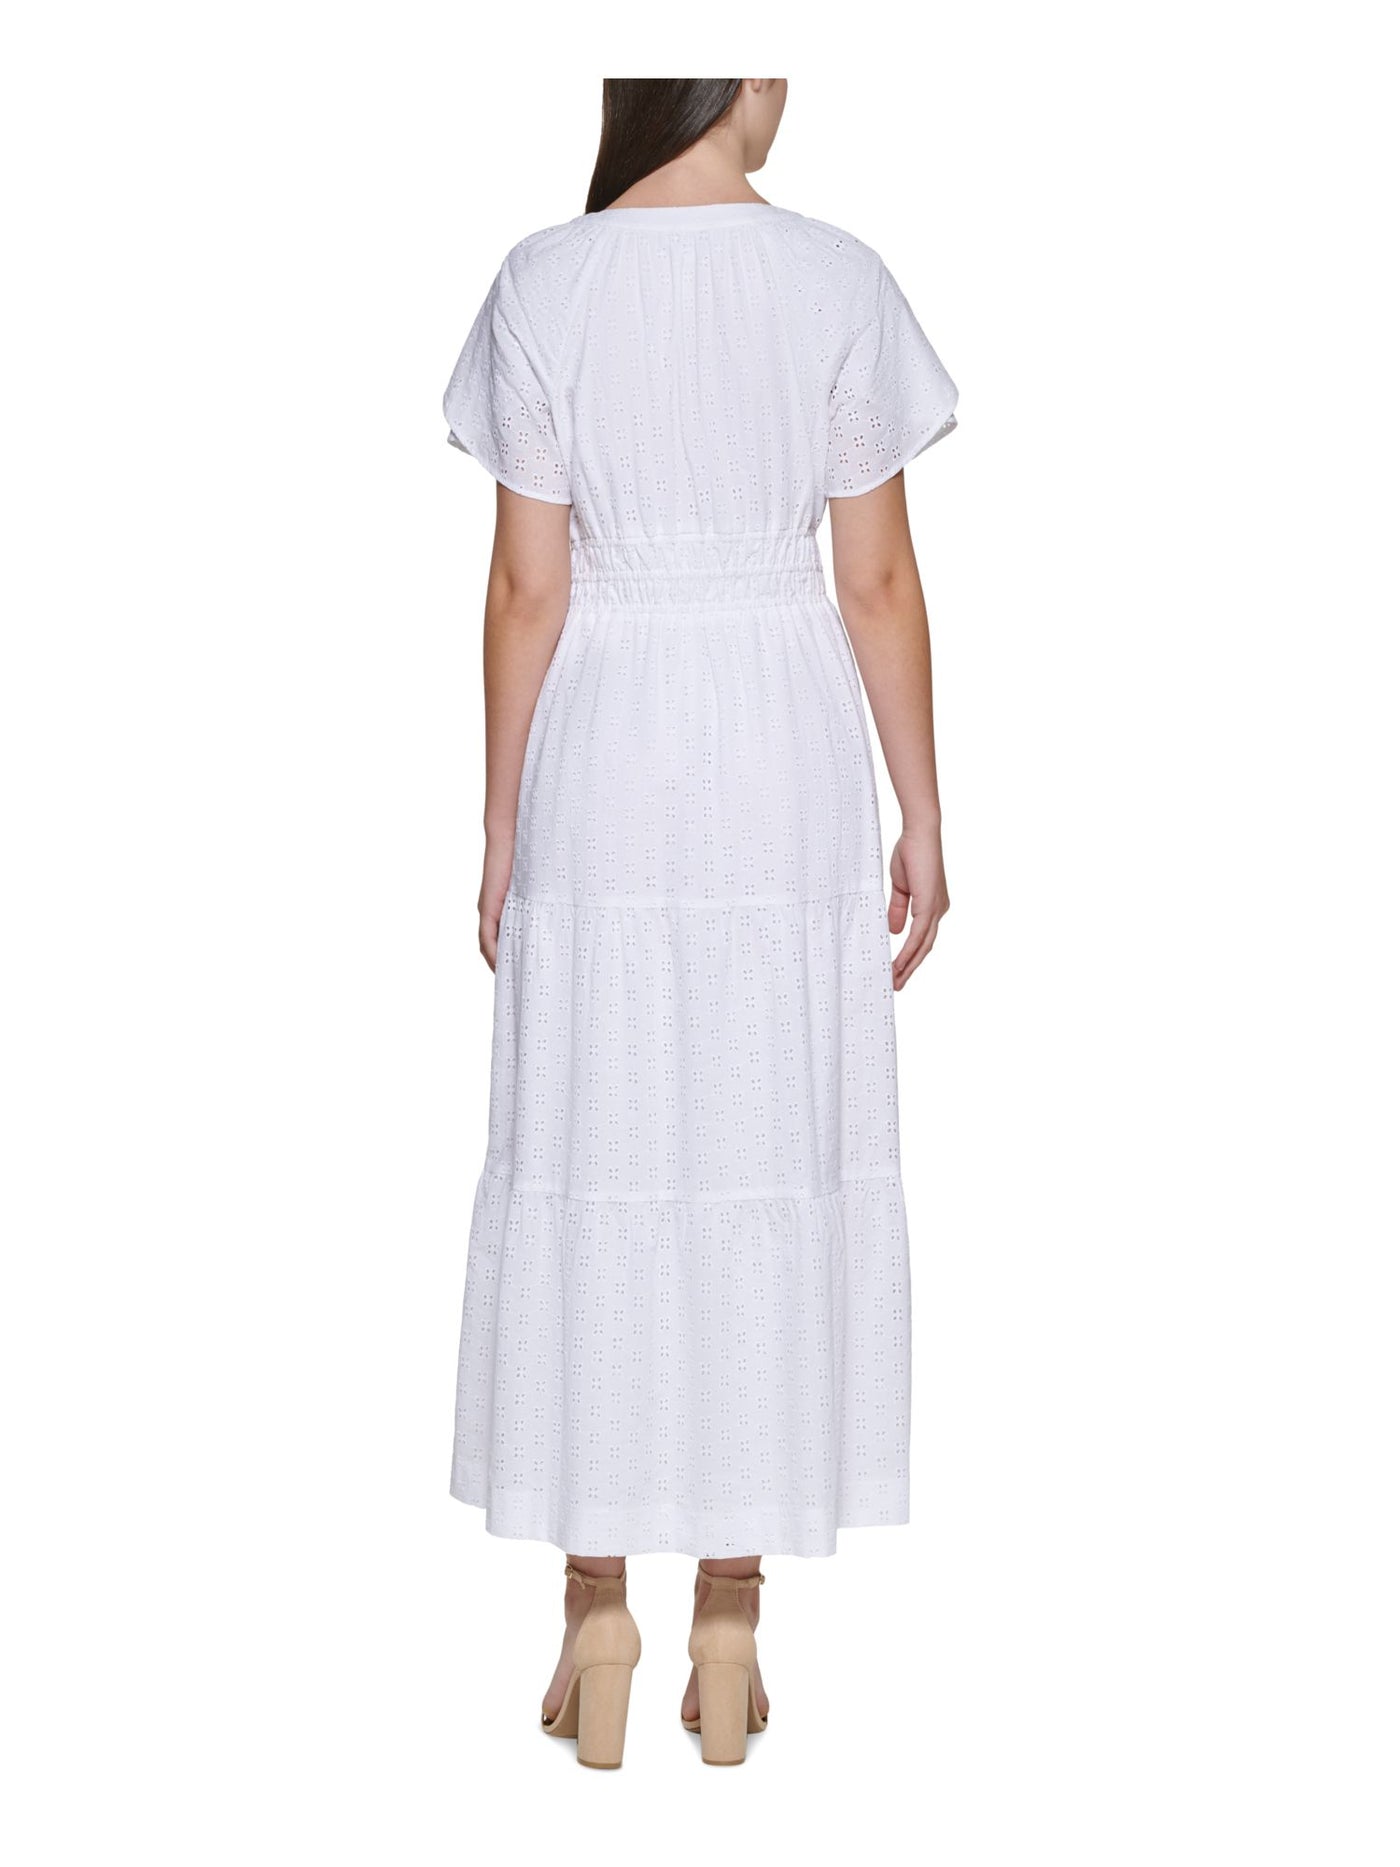 KENSIE DRESSES Womens White Eyelet Elastic Waist Tiered Skirt Lined Short Sleeve Split Maxi Wear To Work Fit + Flare Dress 10